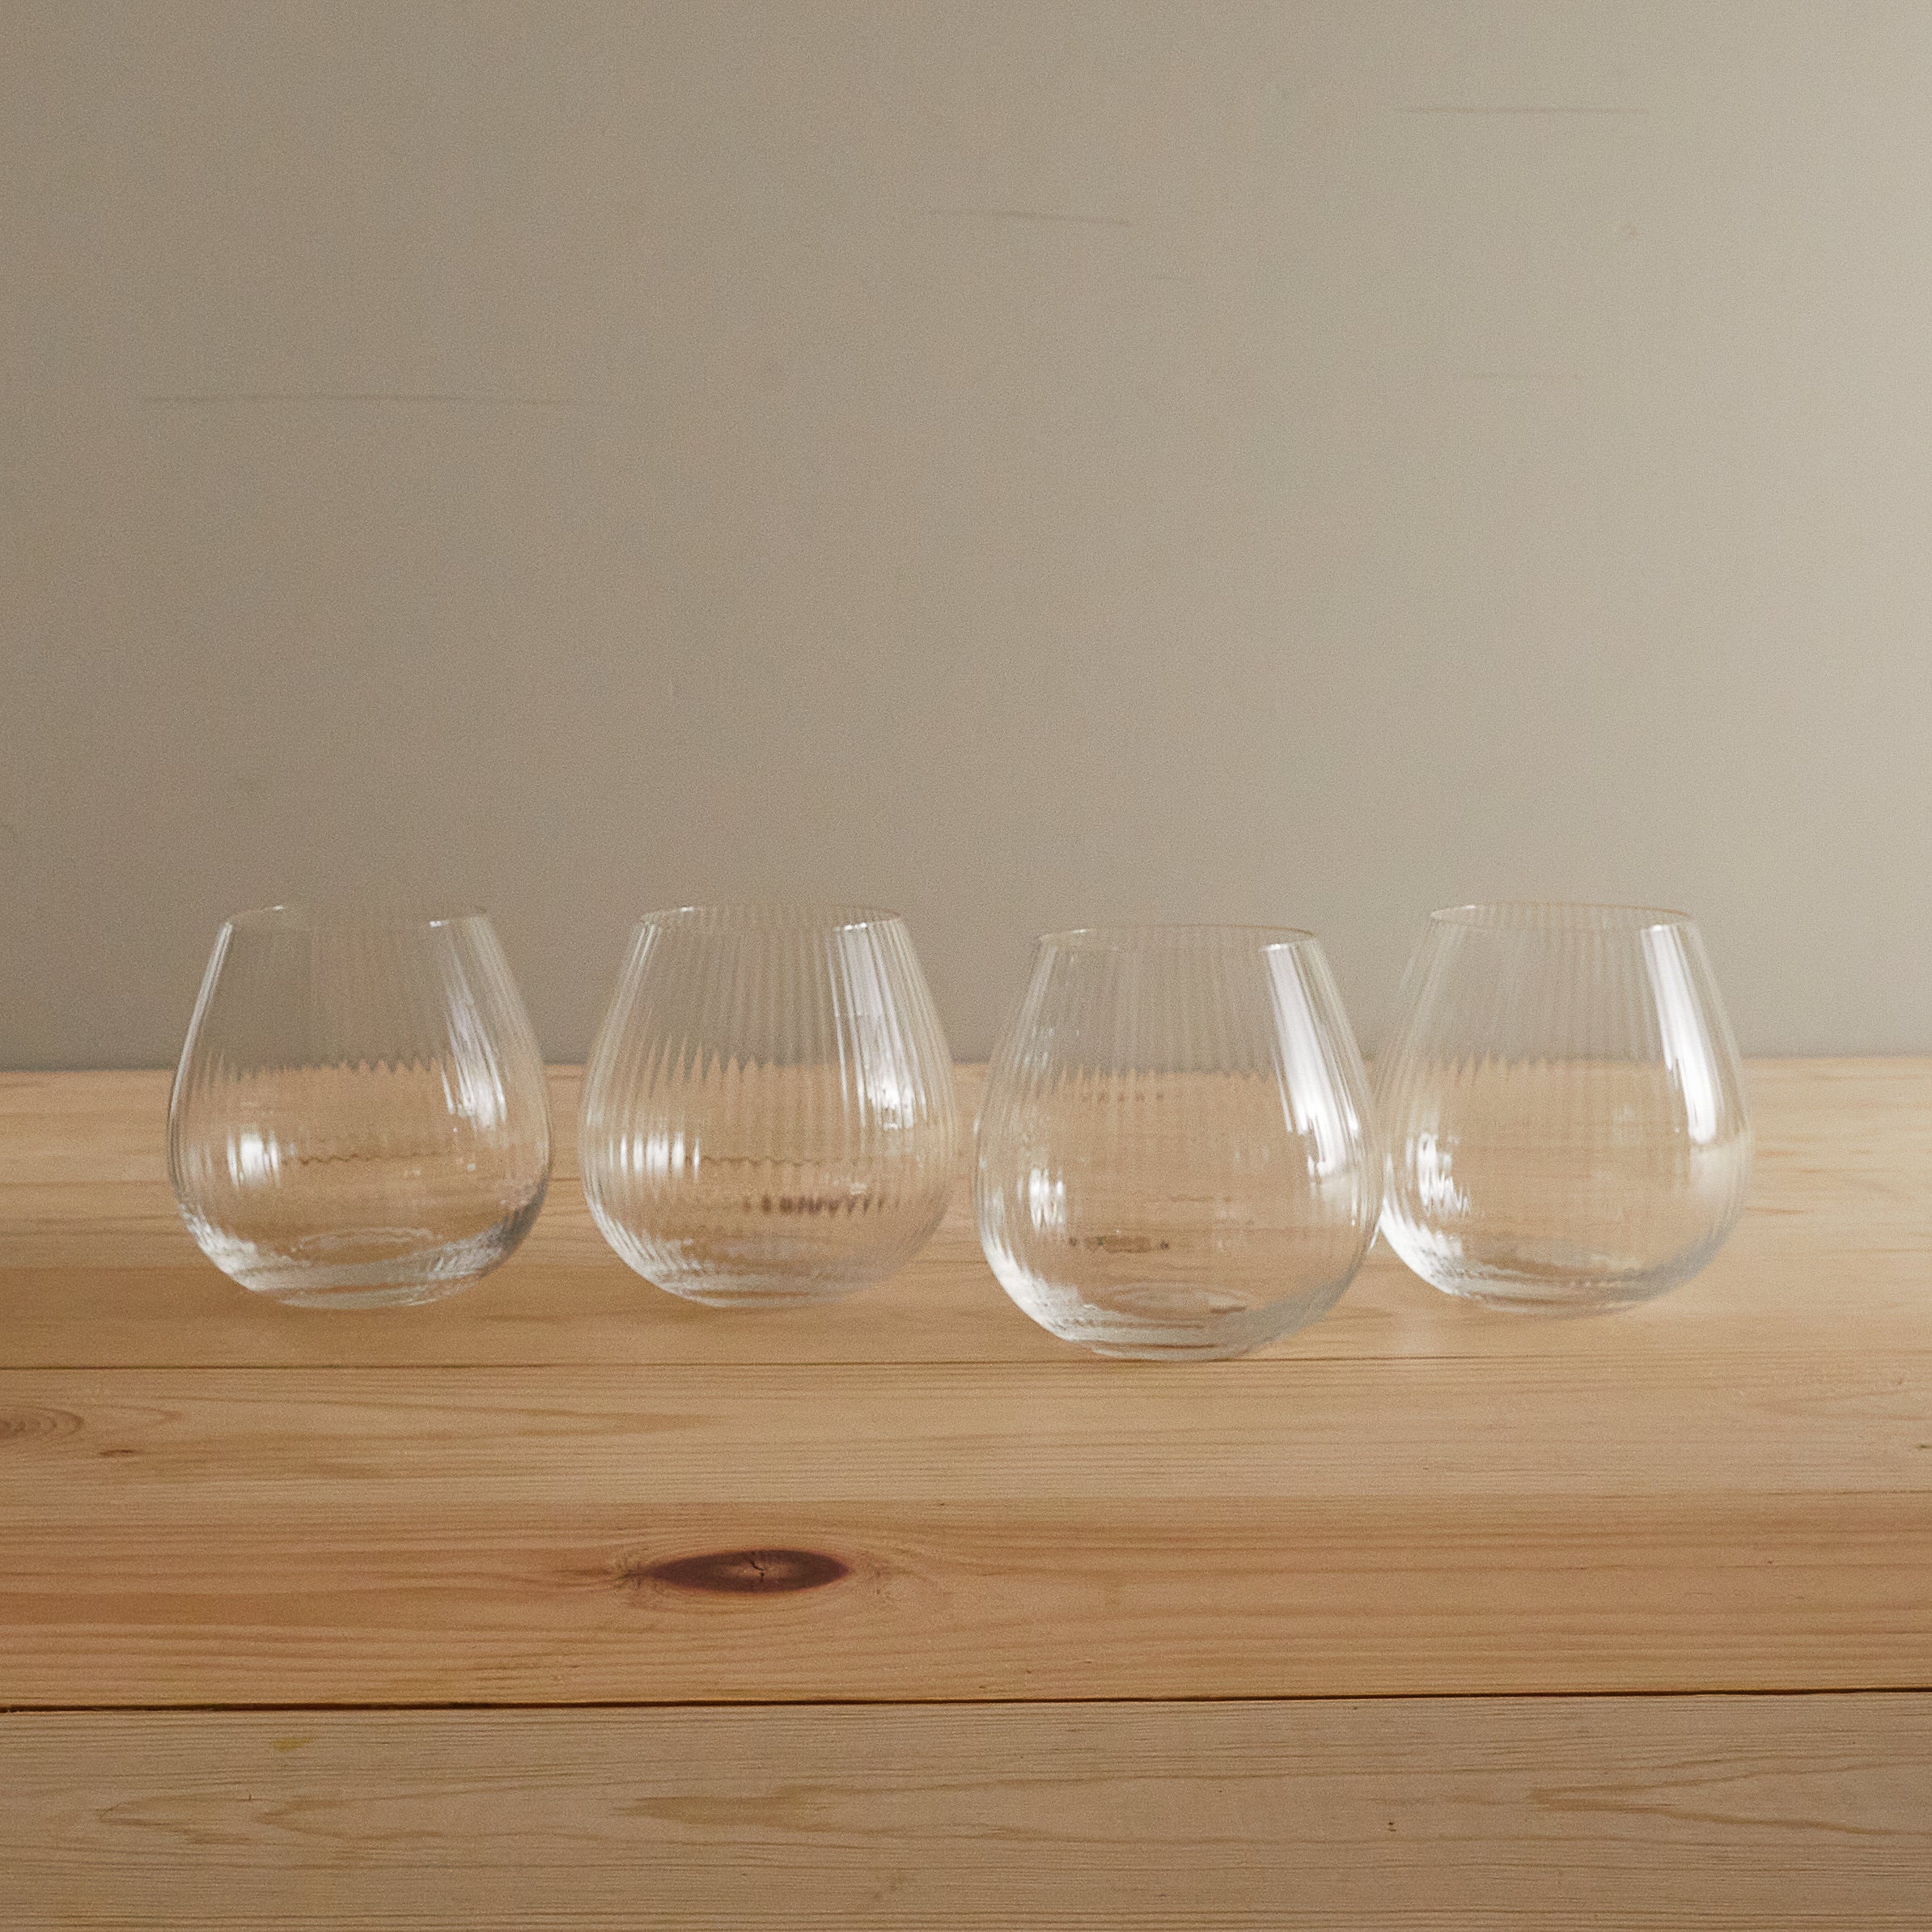 Hayworth Stemless Wine Glass, Set of 6